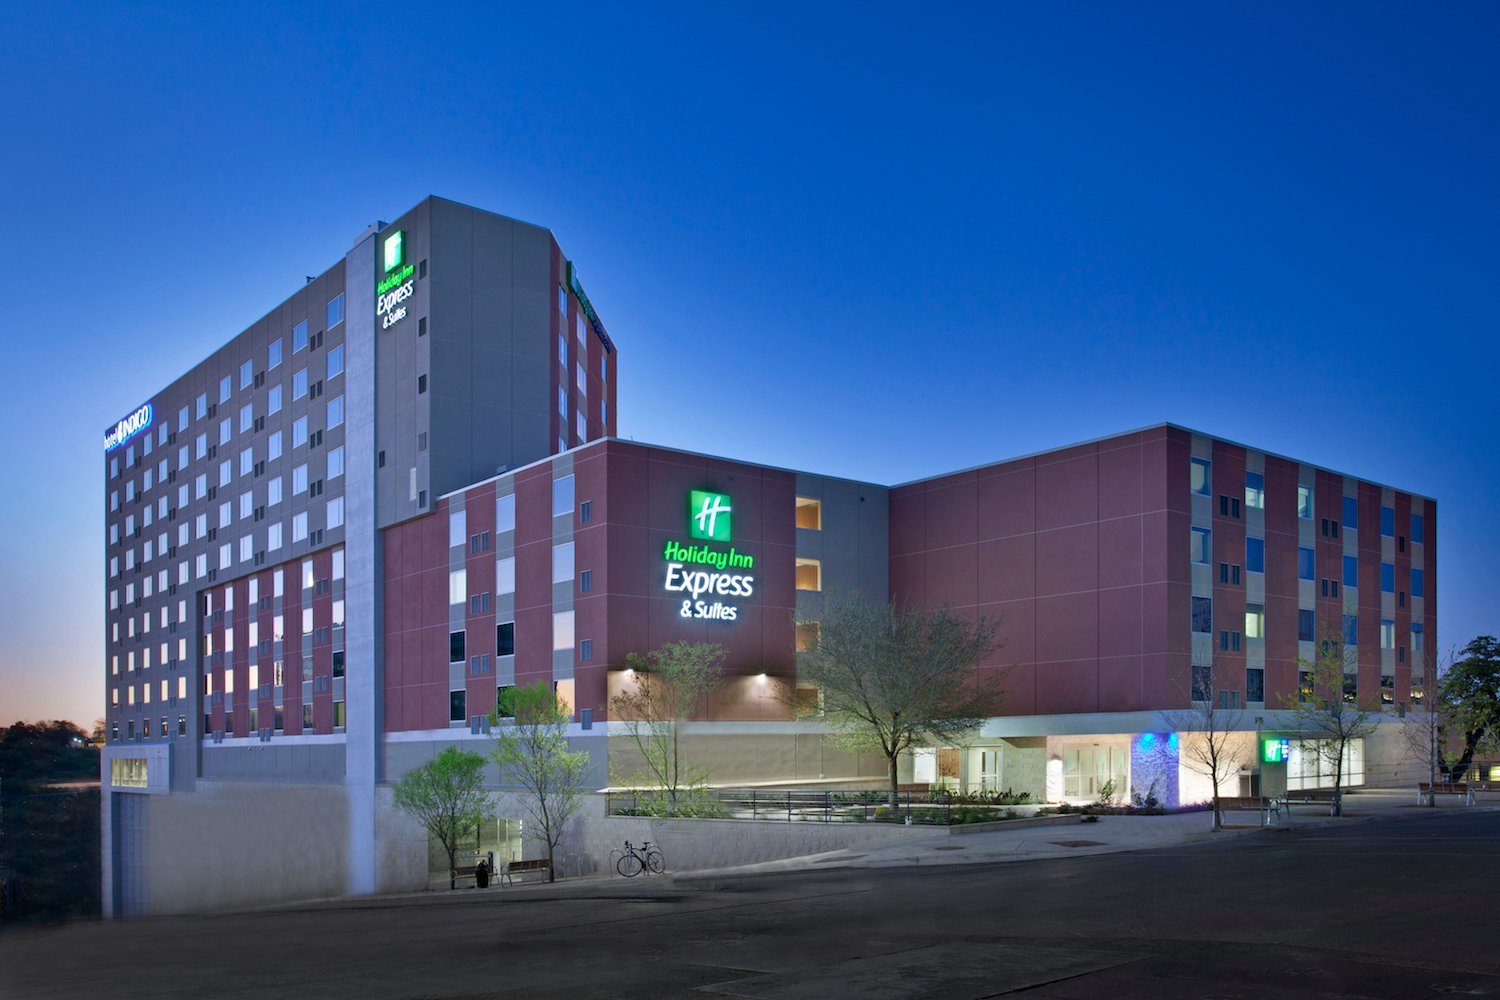 Photo of Holiday Inn Express & Suites Austin Downtown - University, Austin, TX